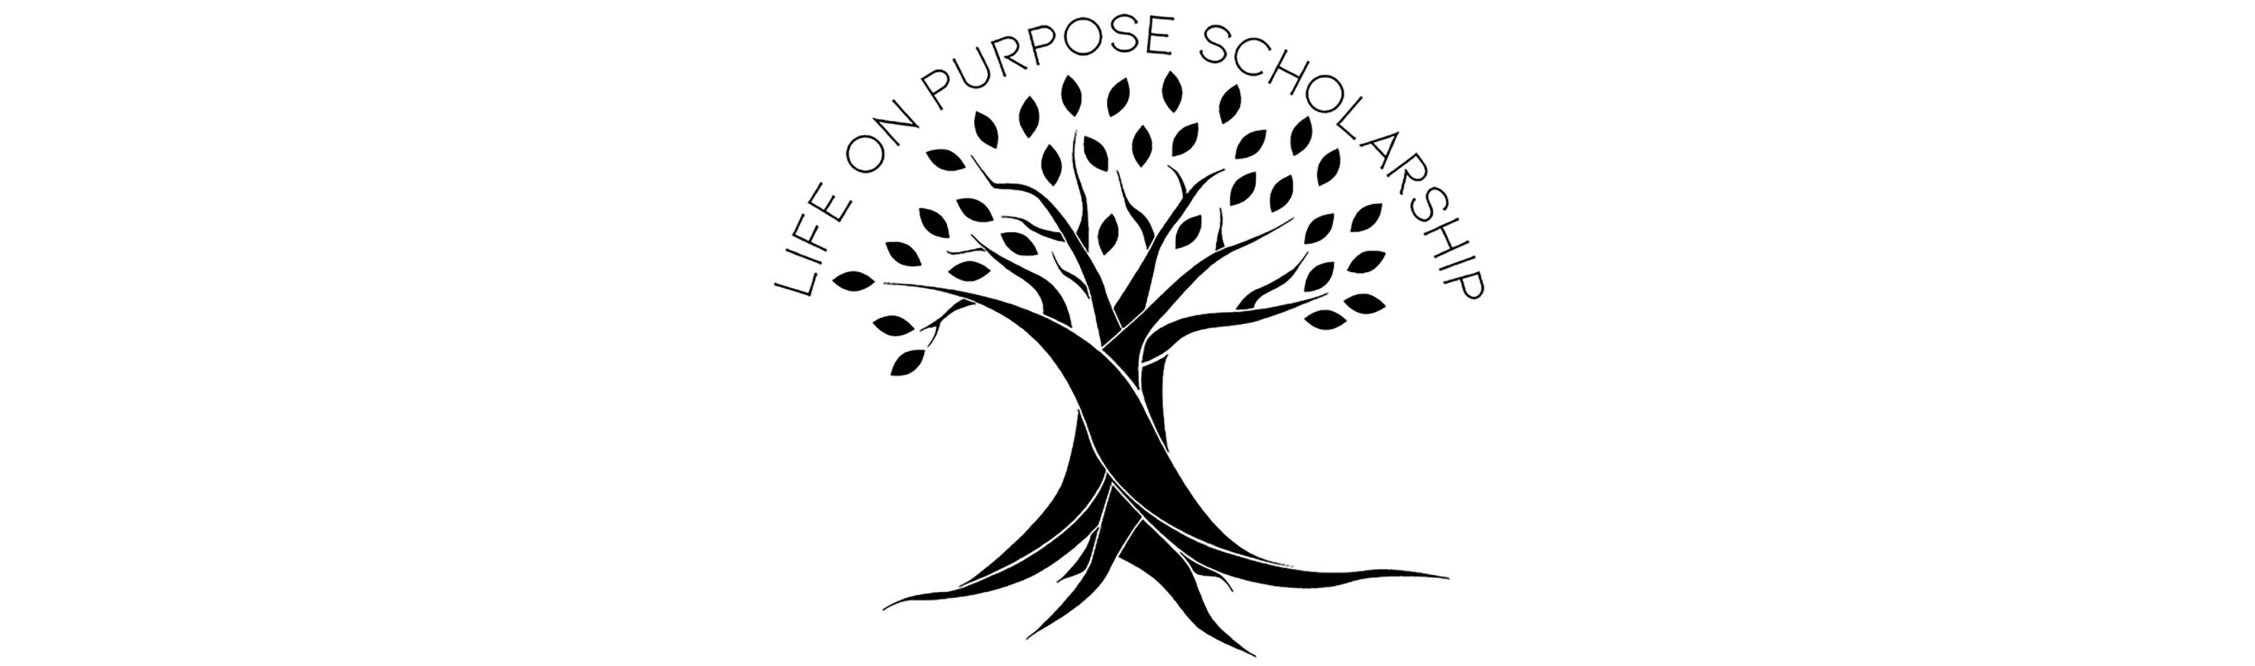 Life on Purpose Scholarship